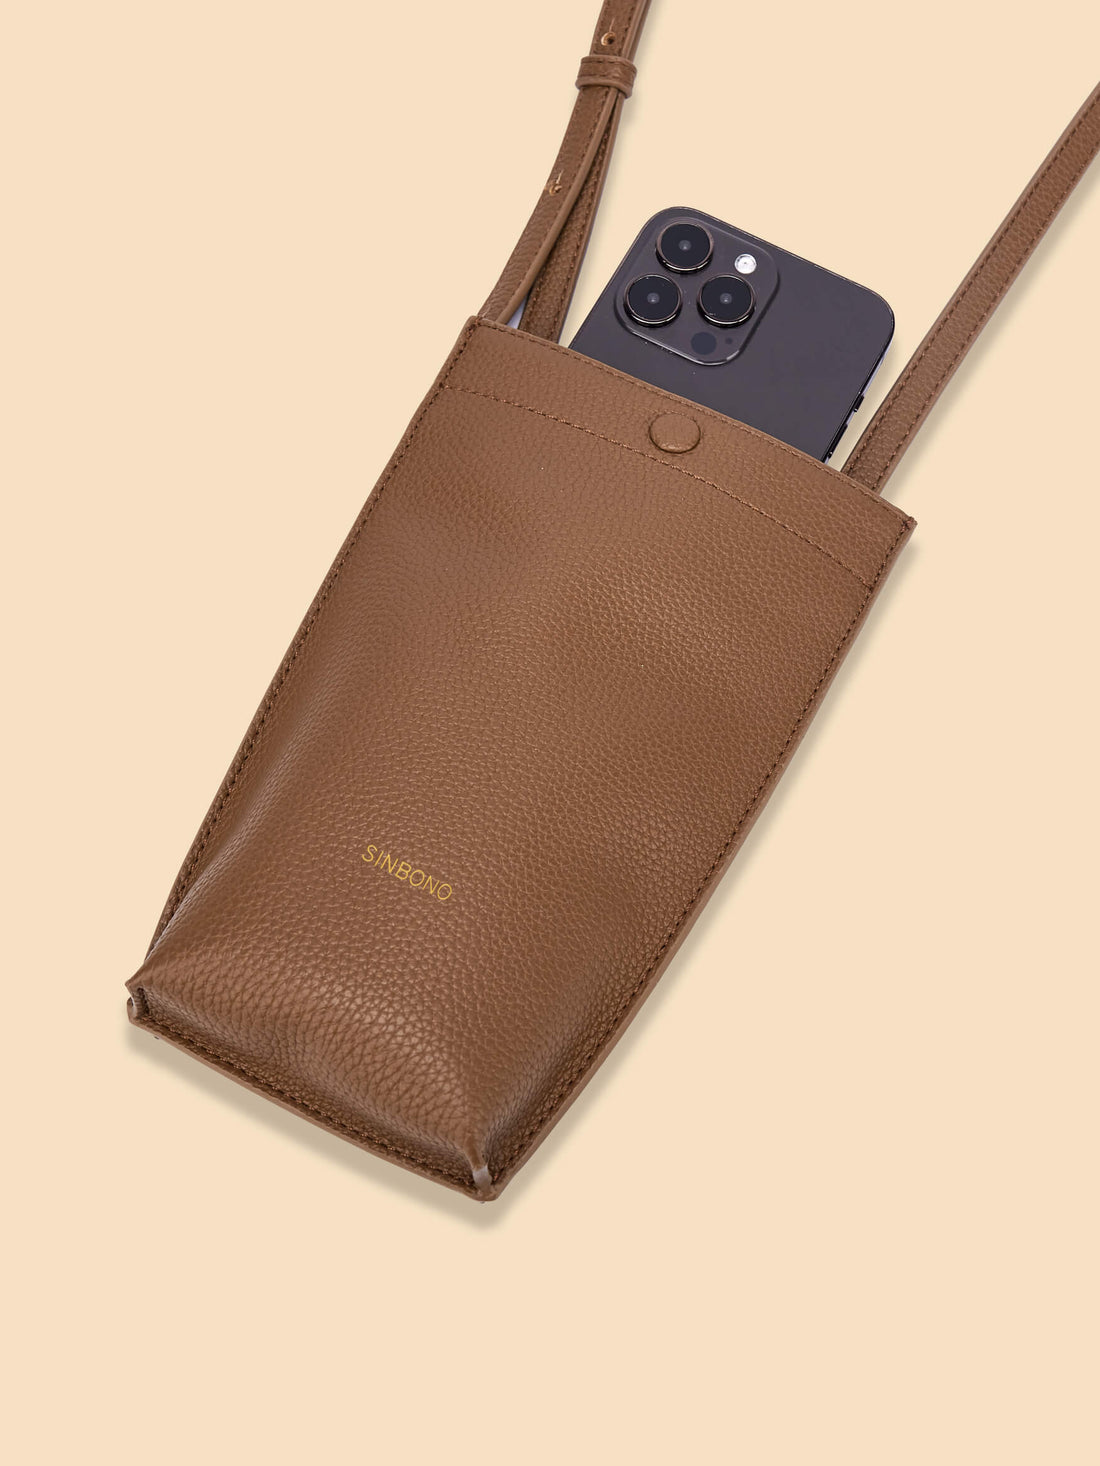 SINBONO Brown Crossbody Bag- High-quality Soft Vegan Leather Bag